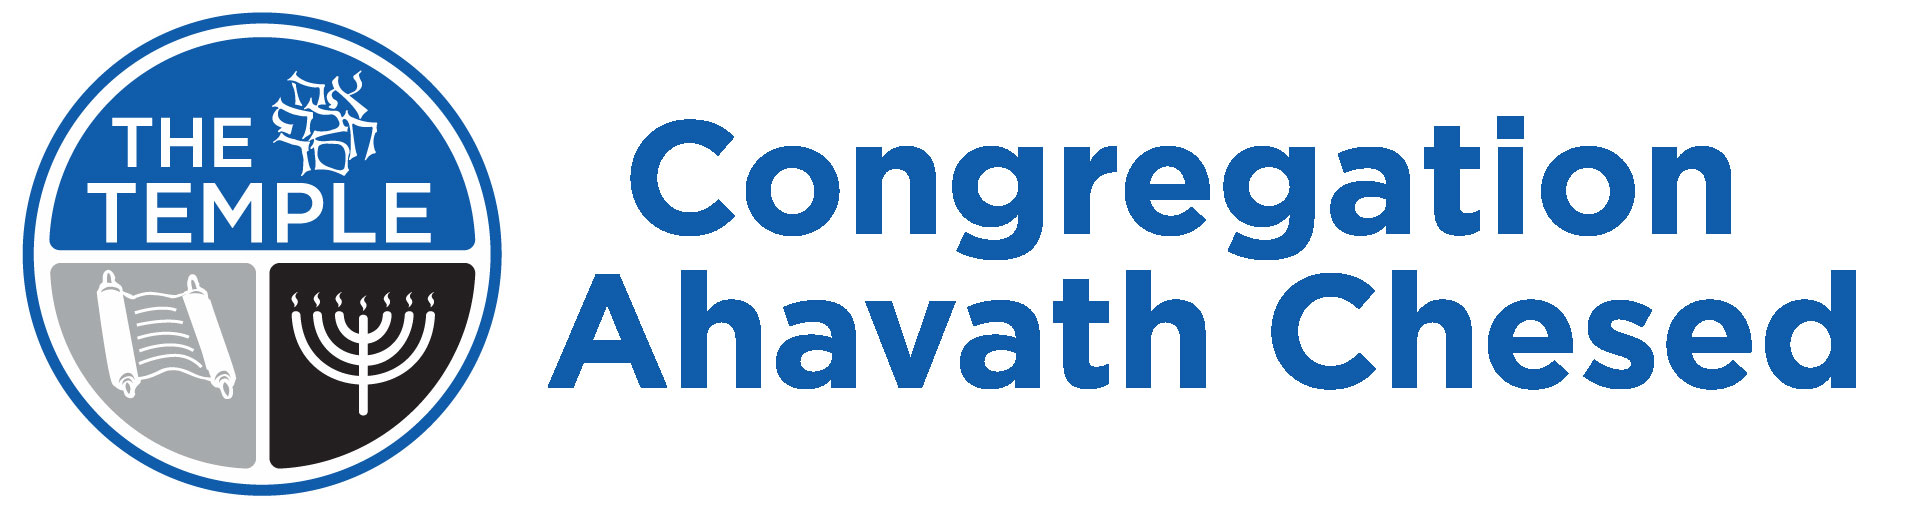 Congregation Ahavath Chesed Reform